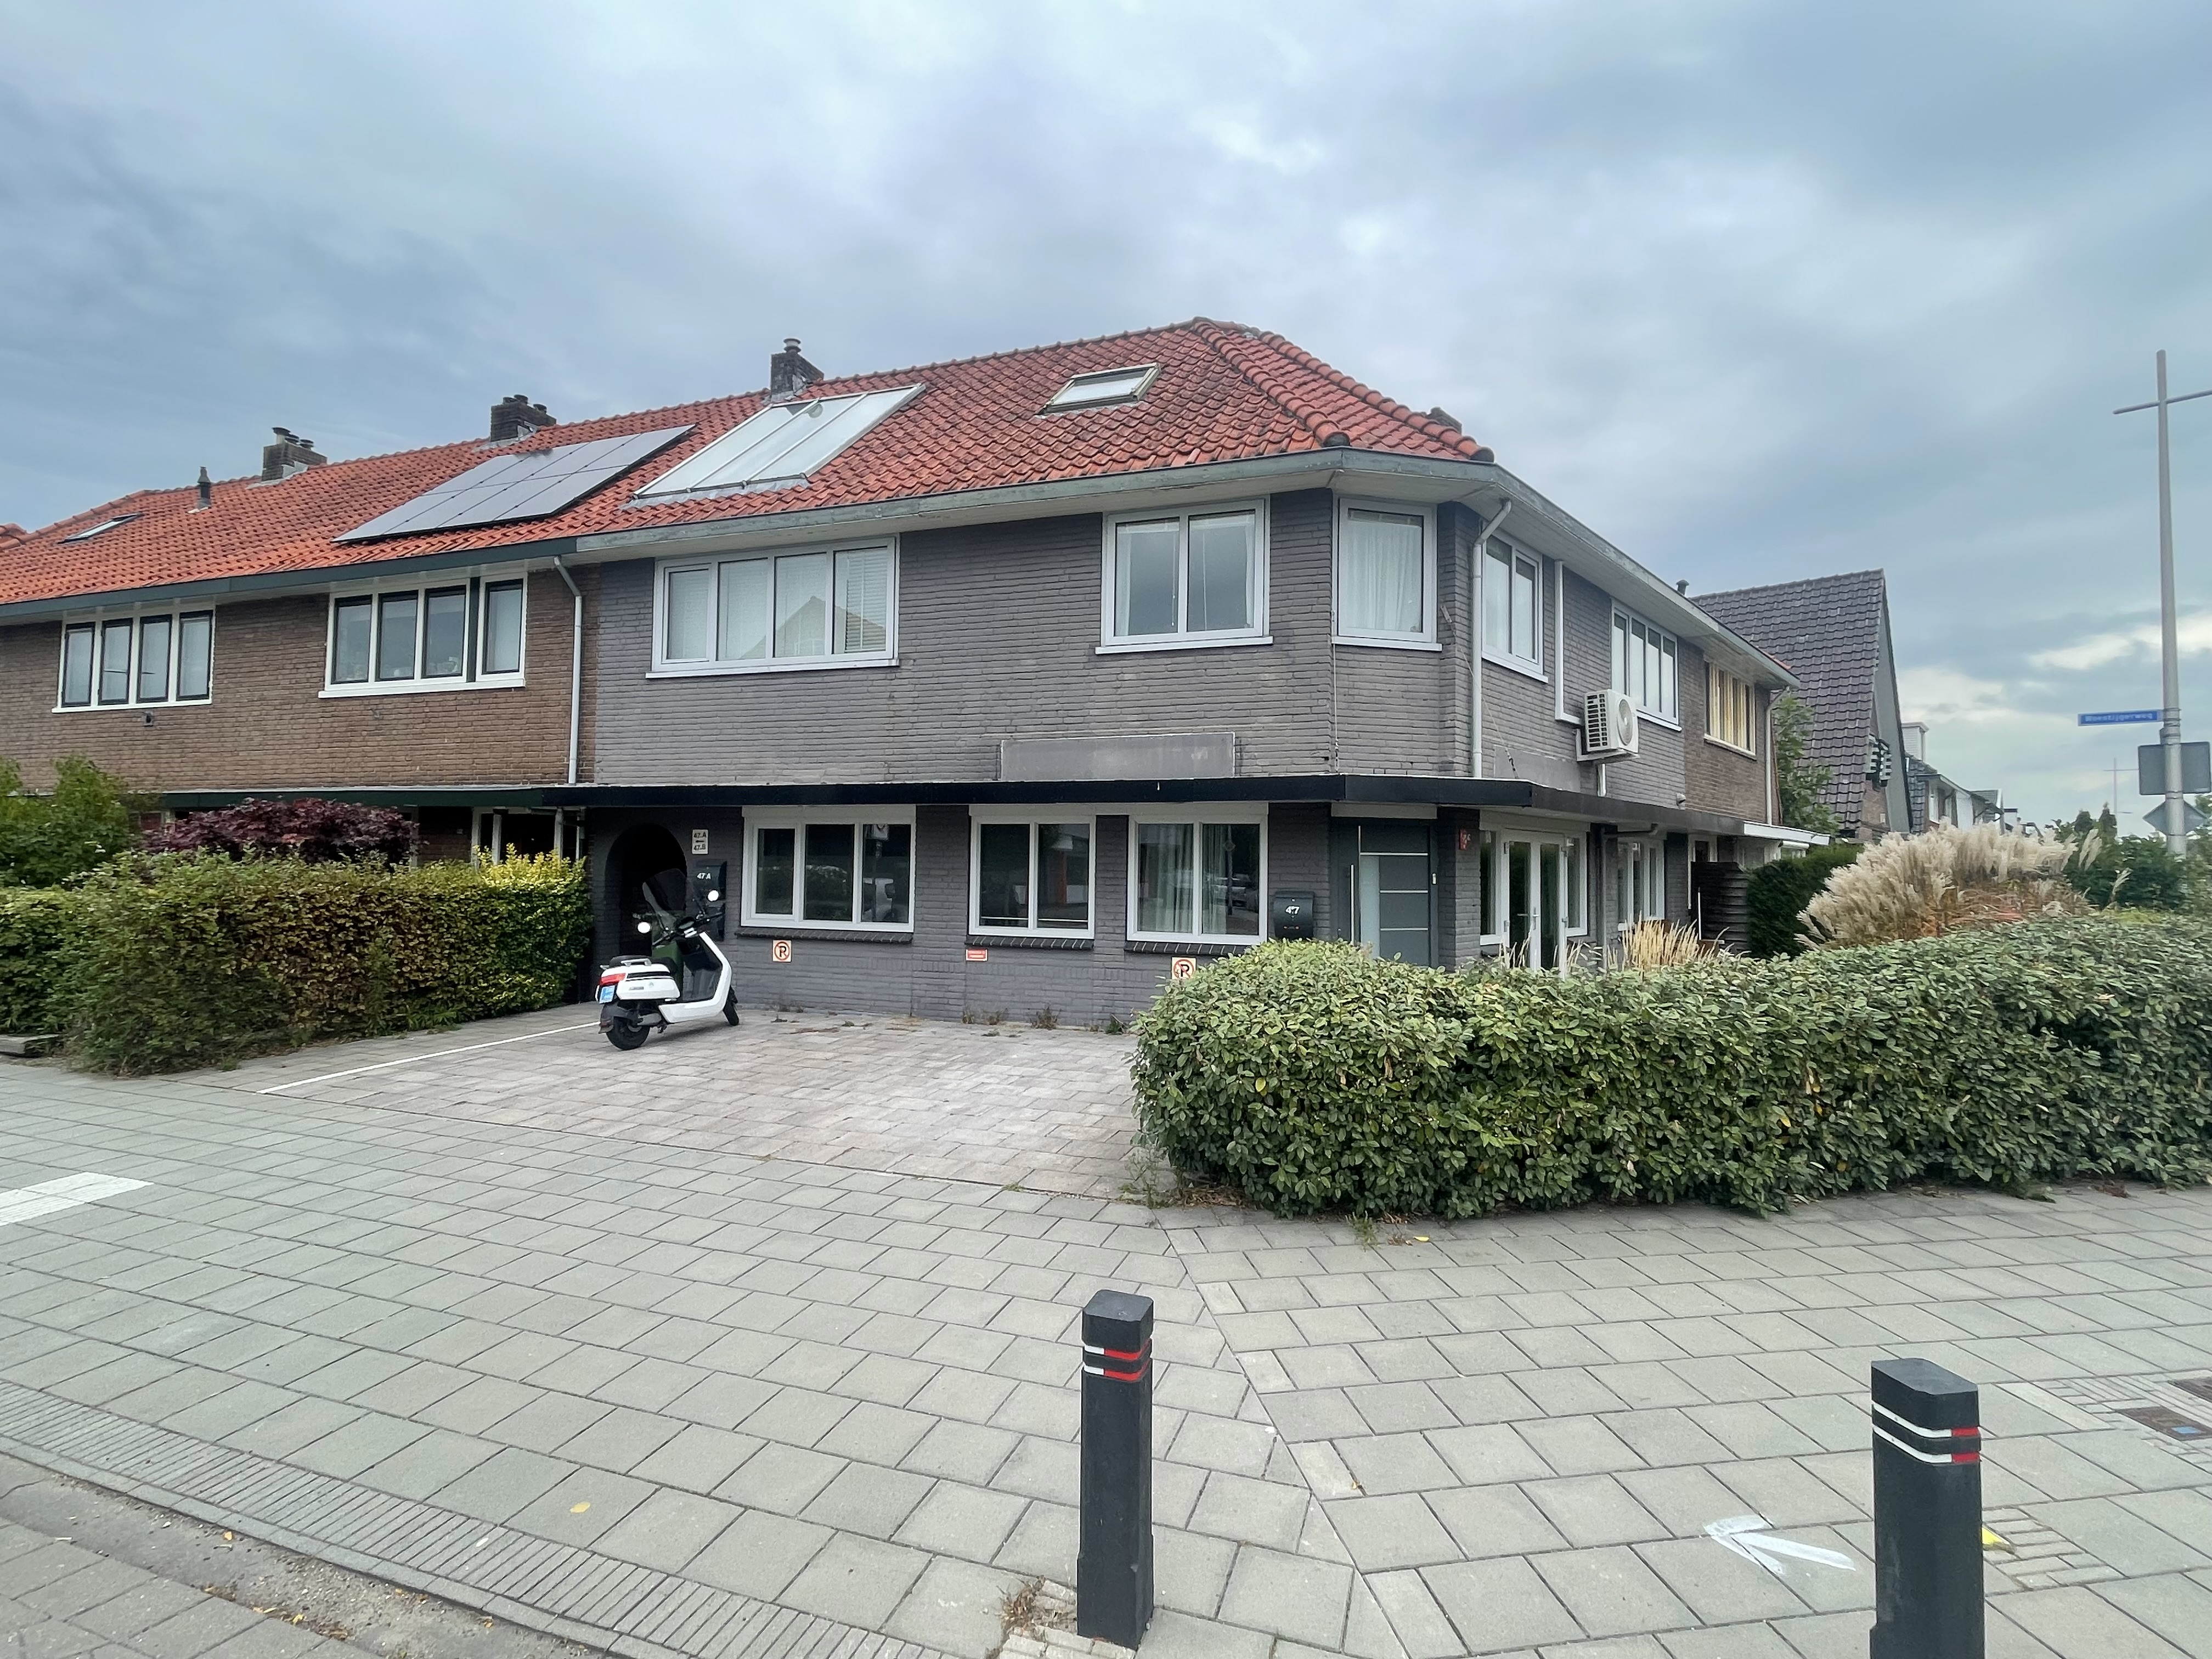 Kamer te huur aan de Everard Meysterweg in Amersfoort